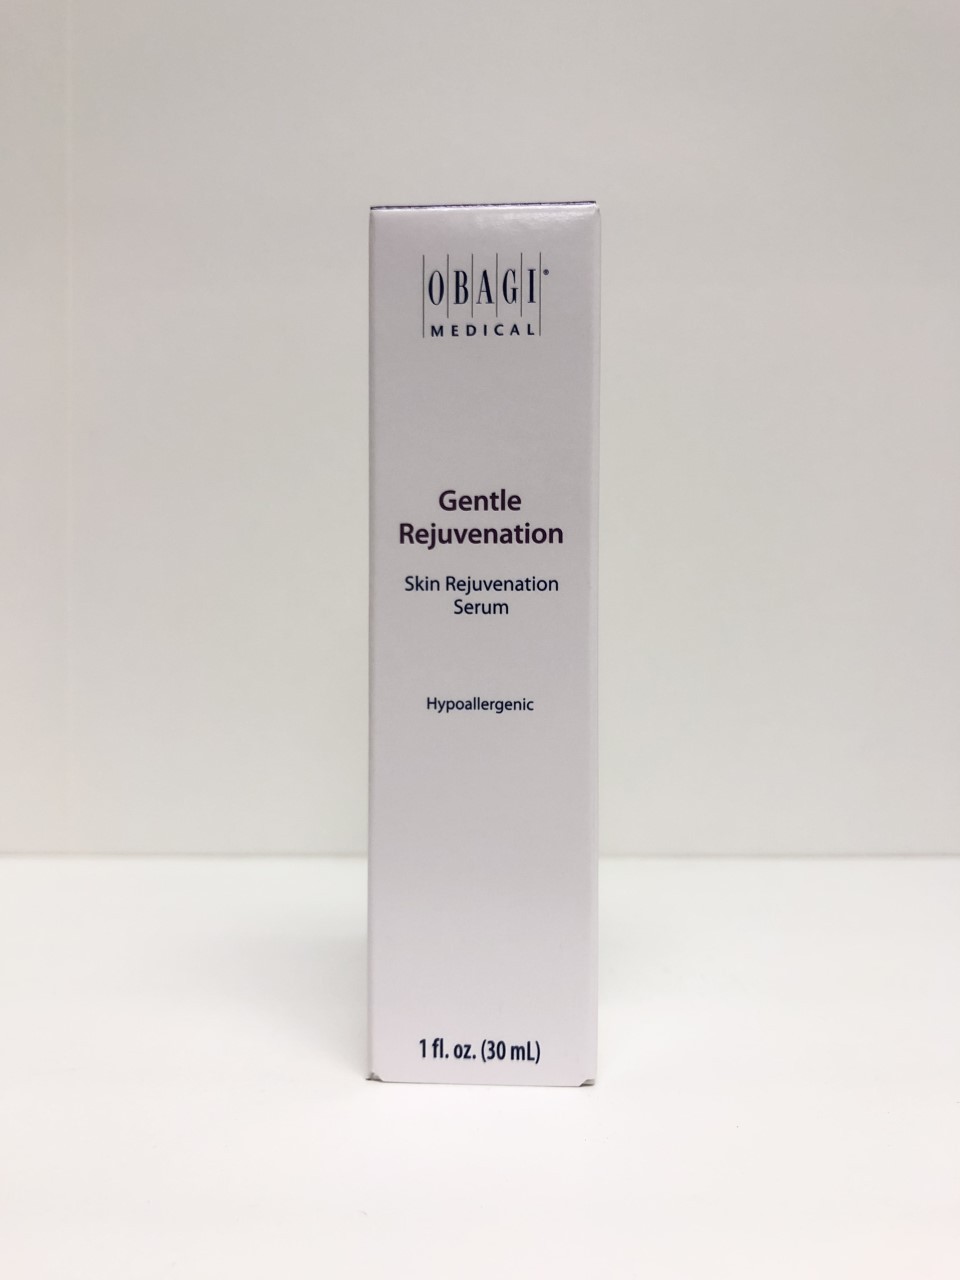 Obagi Gentle Rejuvenation Serum 1 oz Brand New in Box - $47.00